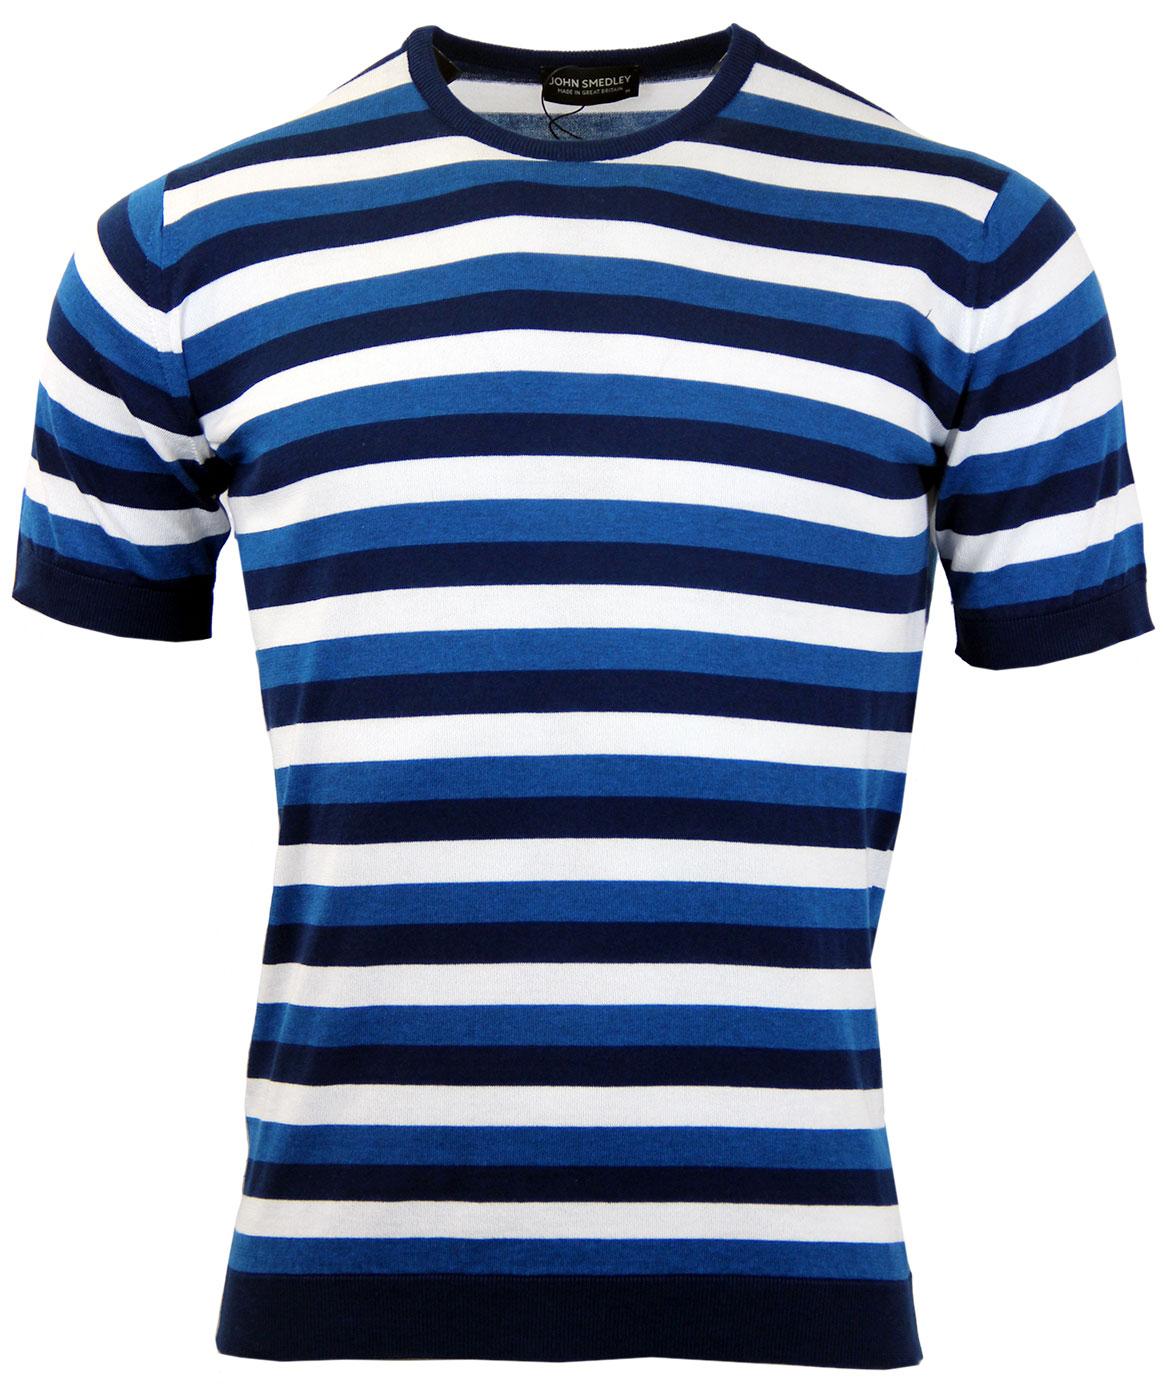 Jetty JOHN SMEDLEY Retro Mod Stripe Knit T-shirt